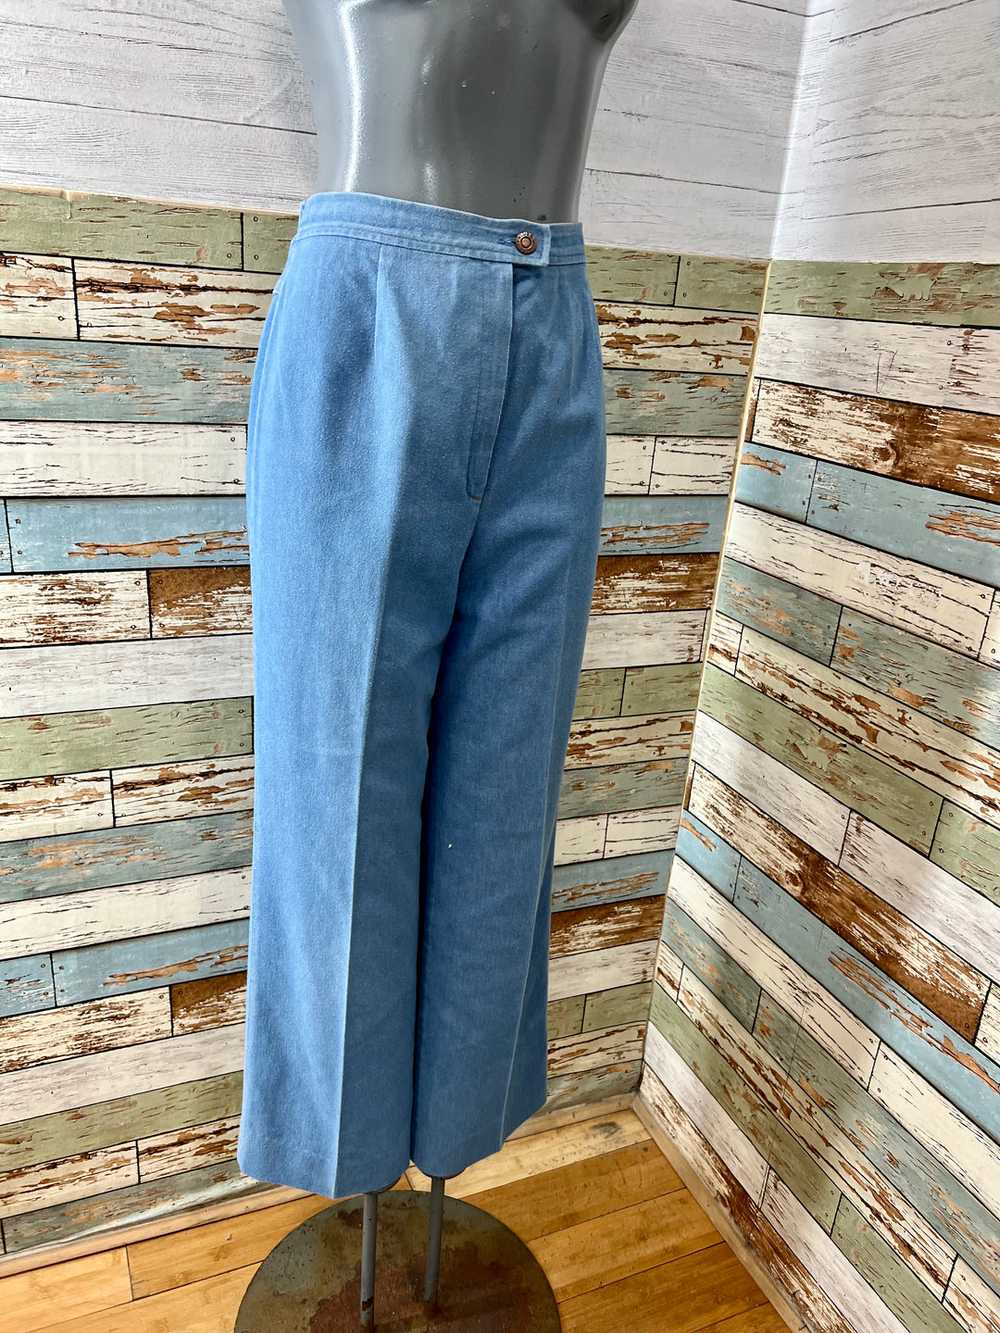 80’s Light Blue Denim Slacks Style Pants - image 2